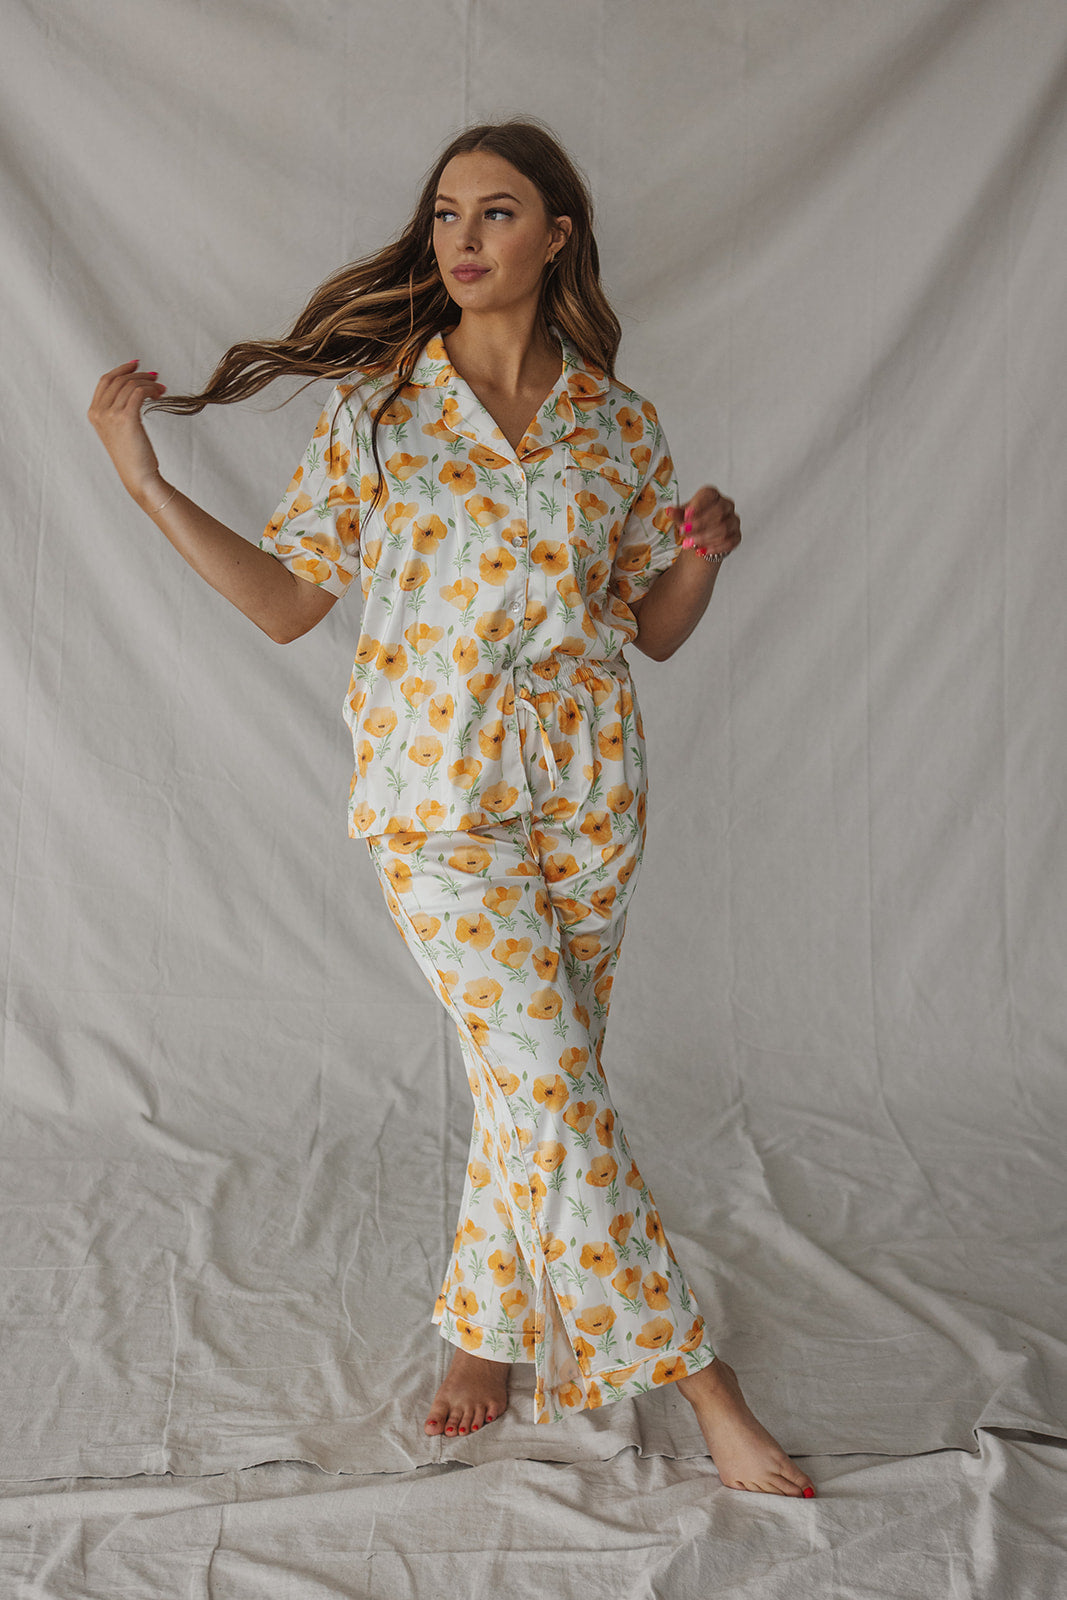 Satin Pajama Set | Orange Poppies Short Sleeve * FINAL SALE*